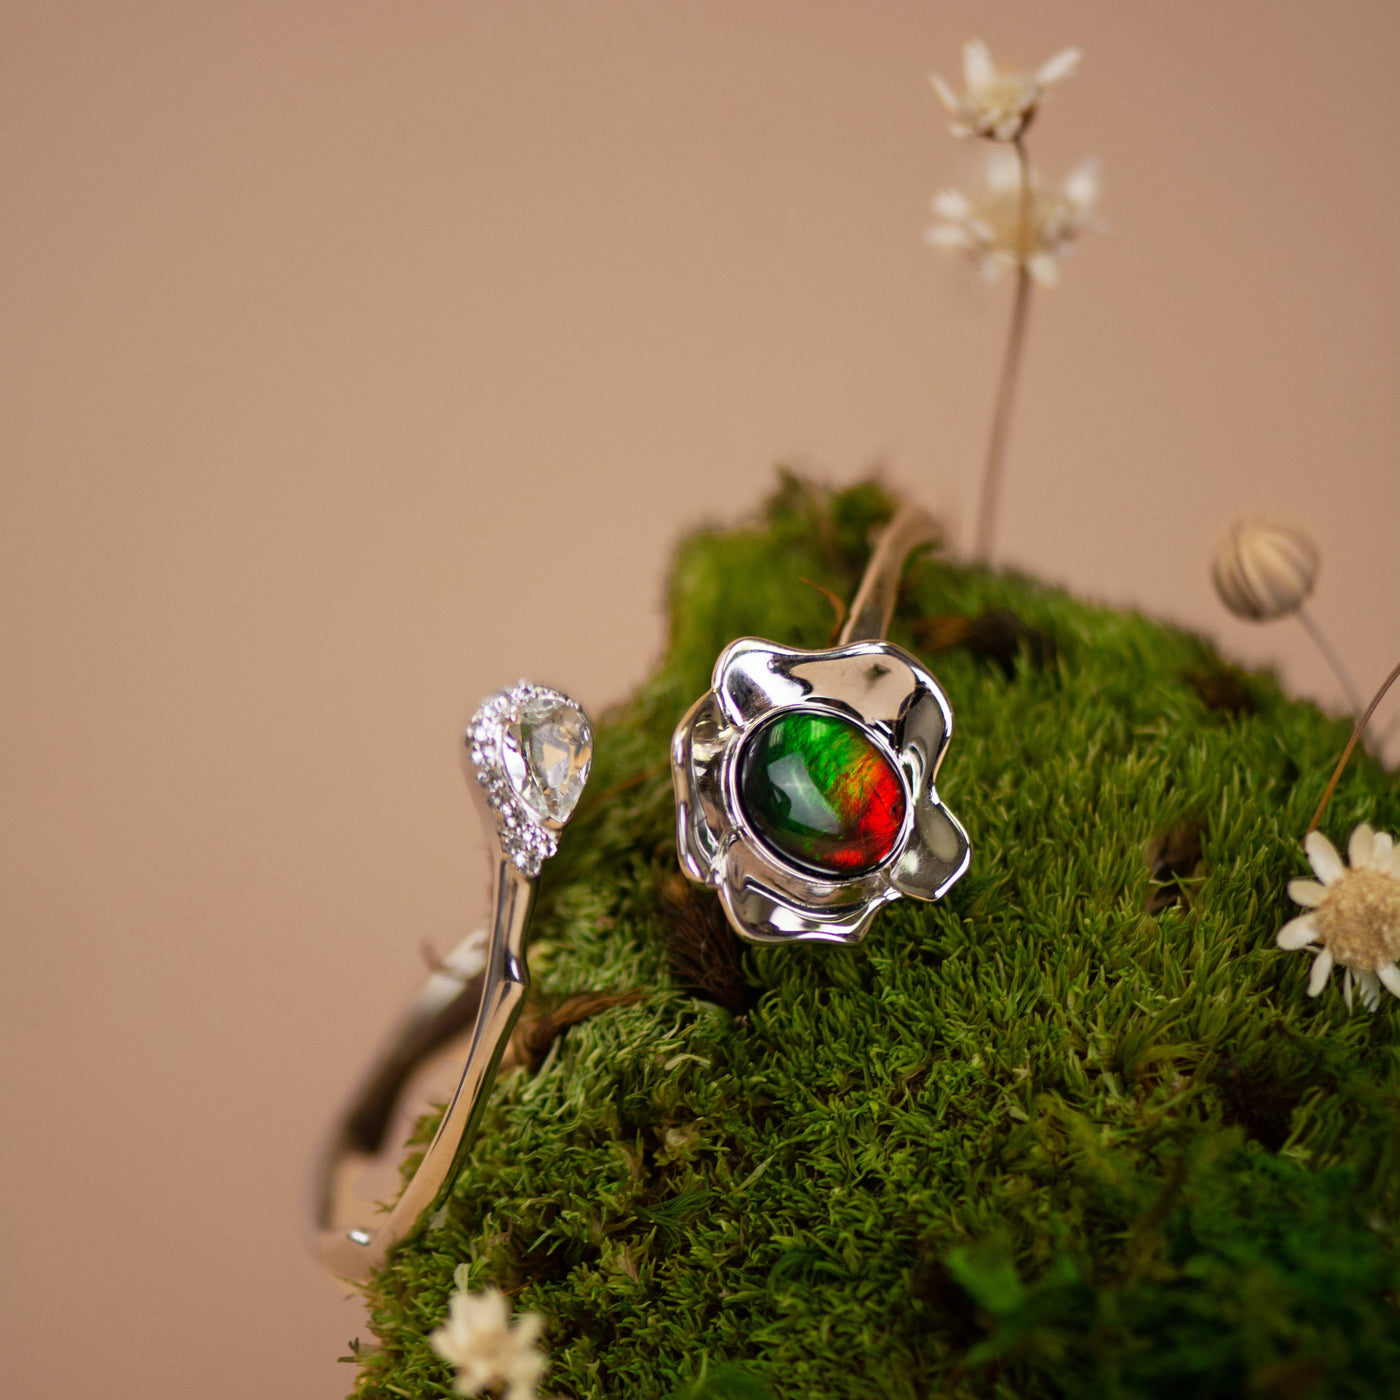 Bloom ammolite pendant and bracelet set in sterling silver